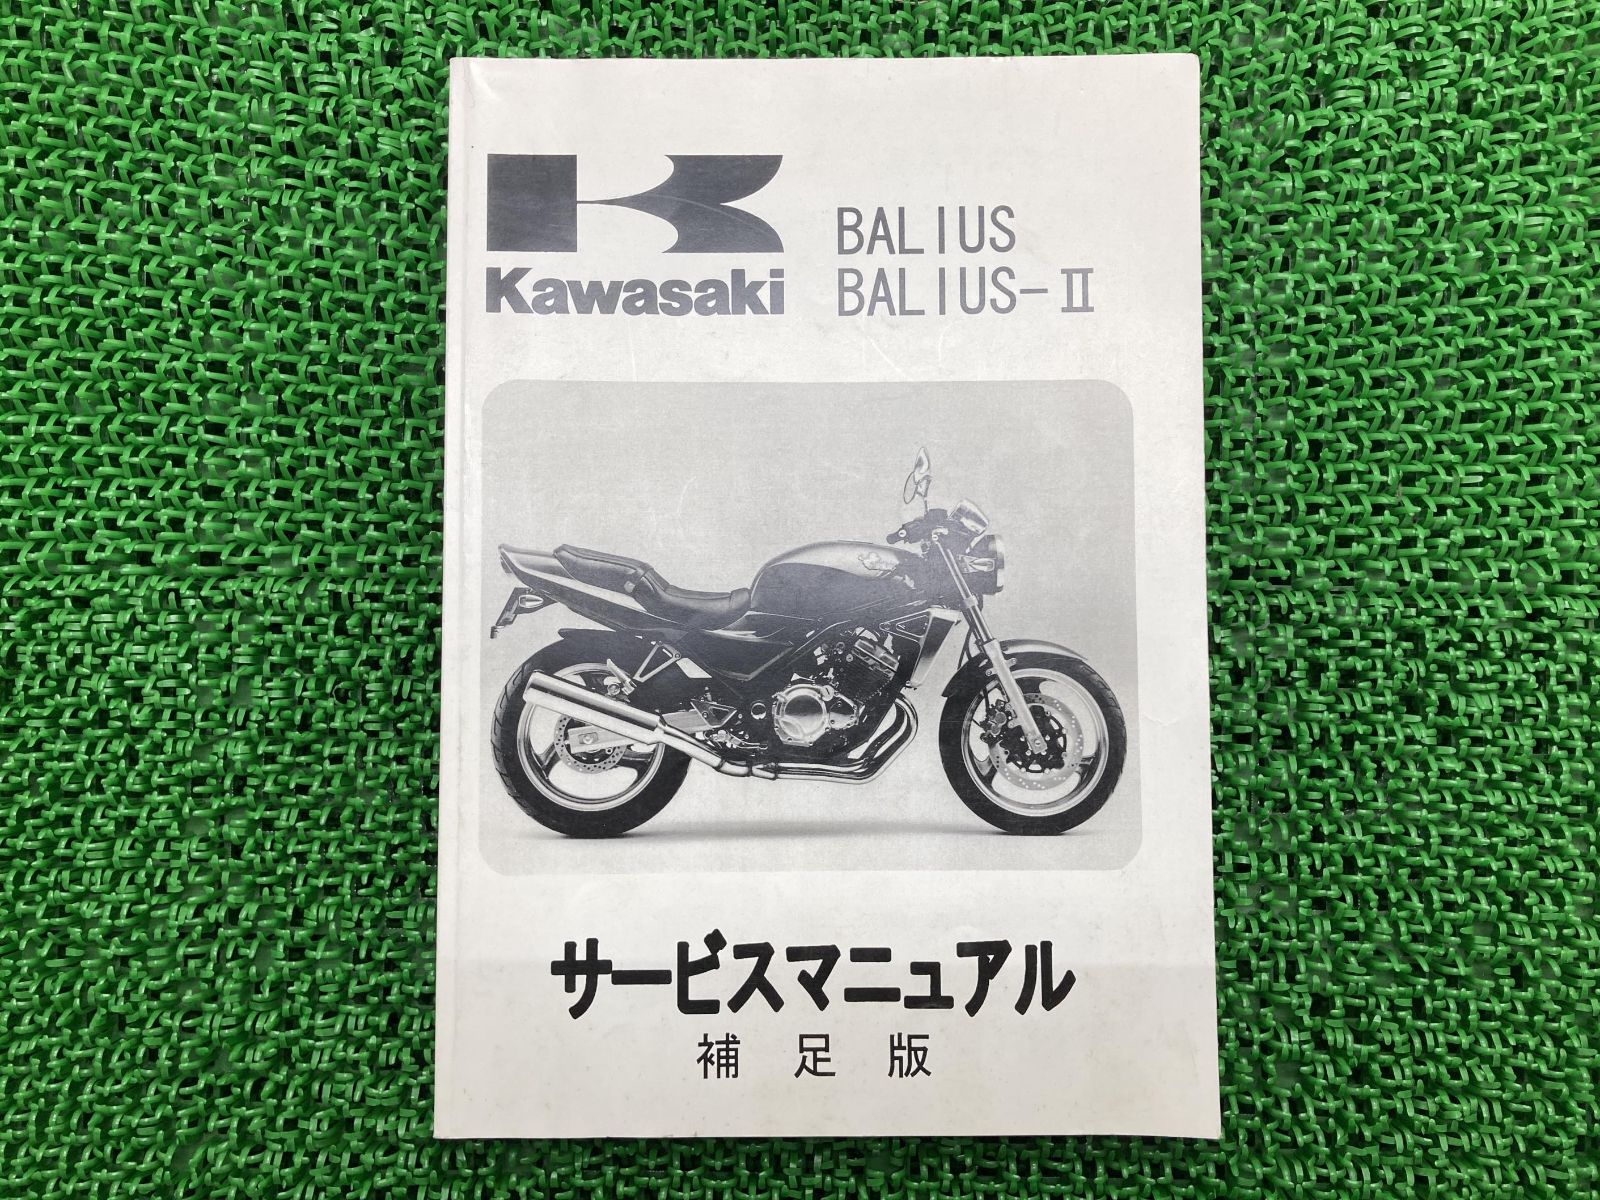 BALIUS BALIUS-II バリオス バリオスII サービスマニュアル 10版補足版 カワサキ 正規  バイク 整備書 ZR250-A1〜A6 ZR250-B1 B2 B4〜B6 配線図:22163353